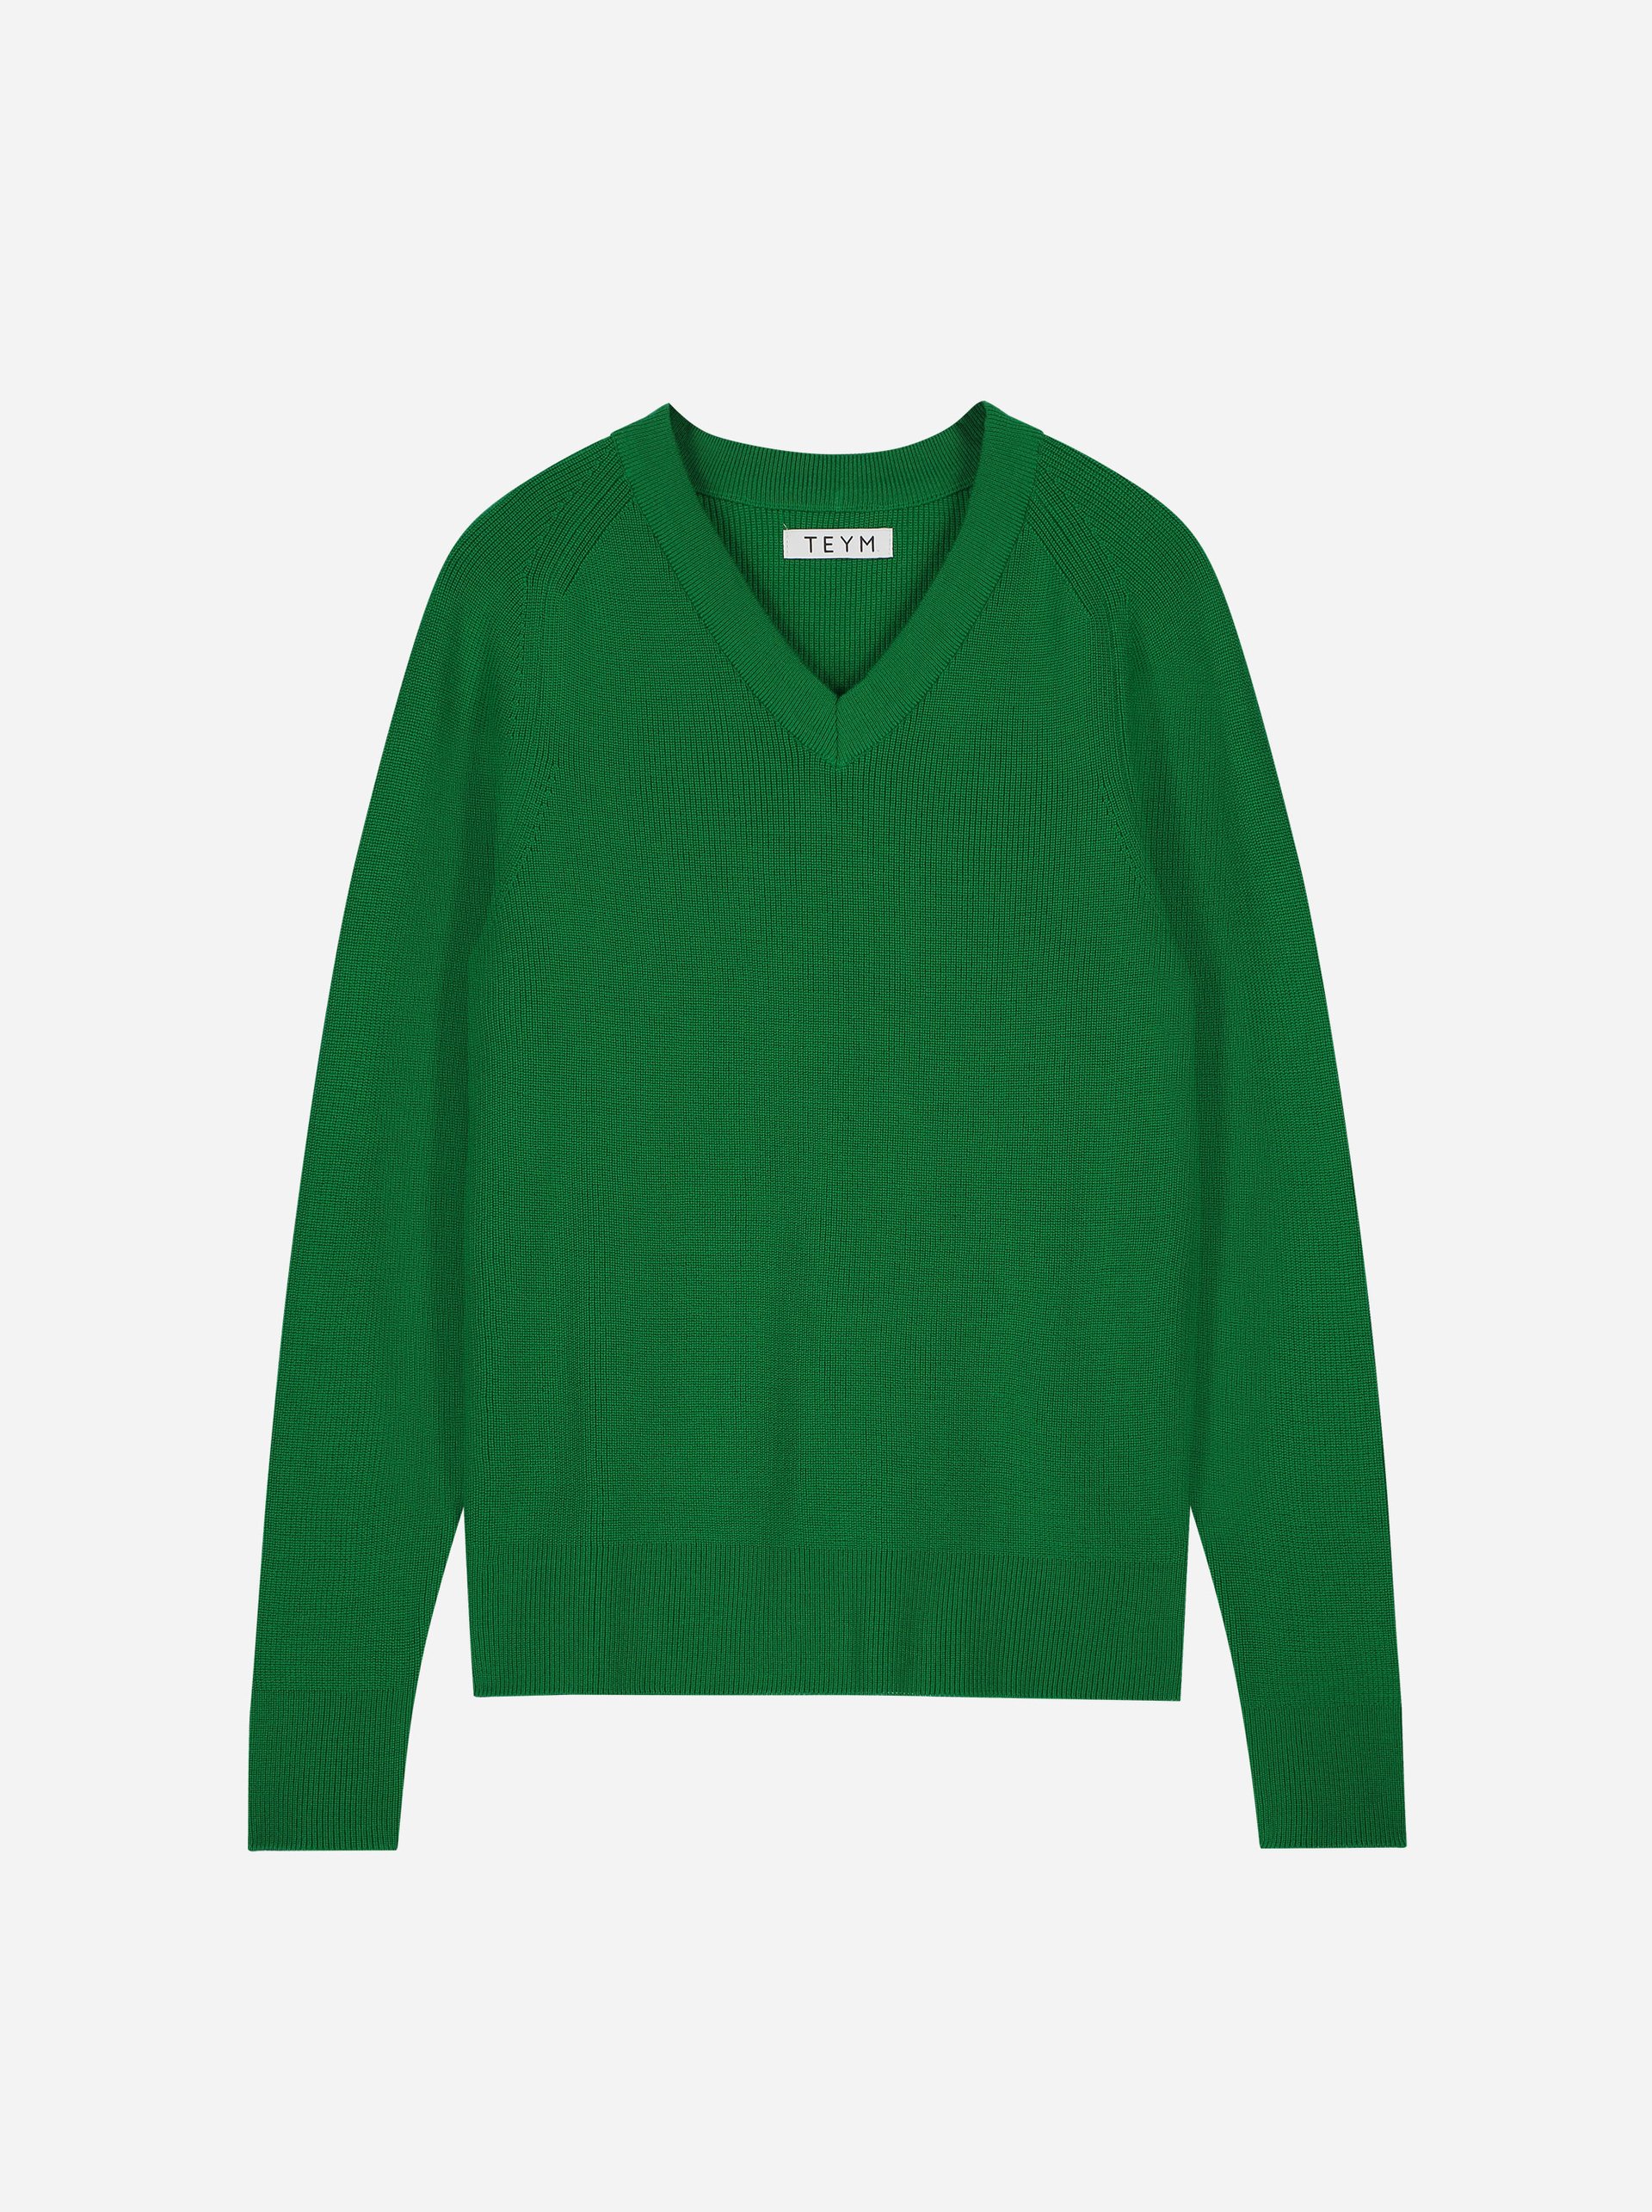 Teym - V-Neck - The Merino Sweater - Women - Bright Green - 4